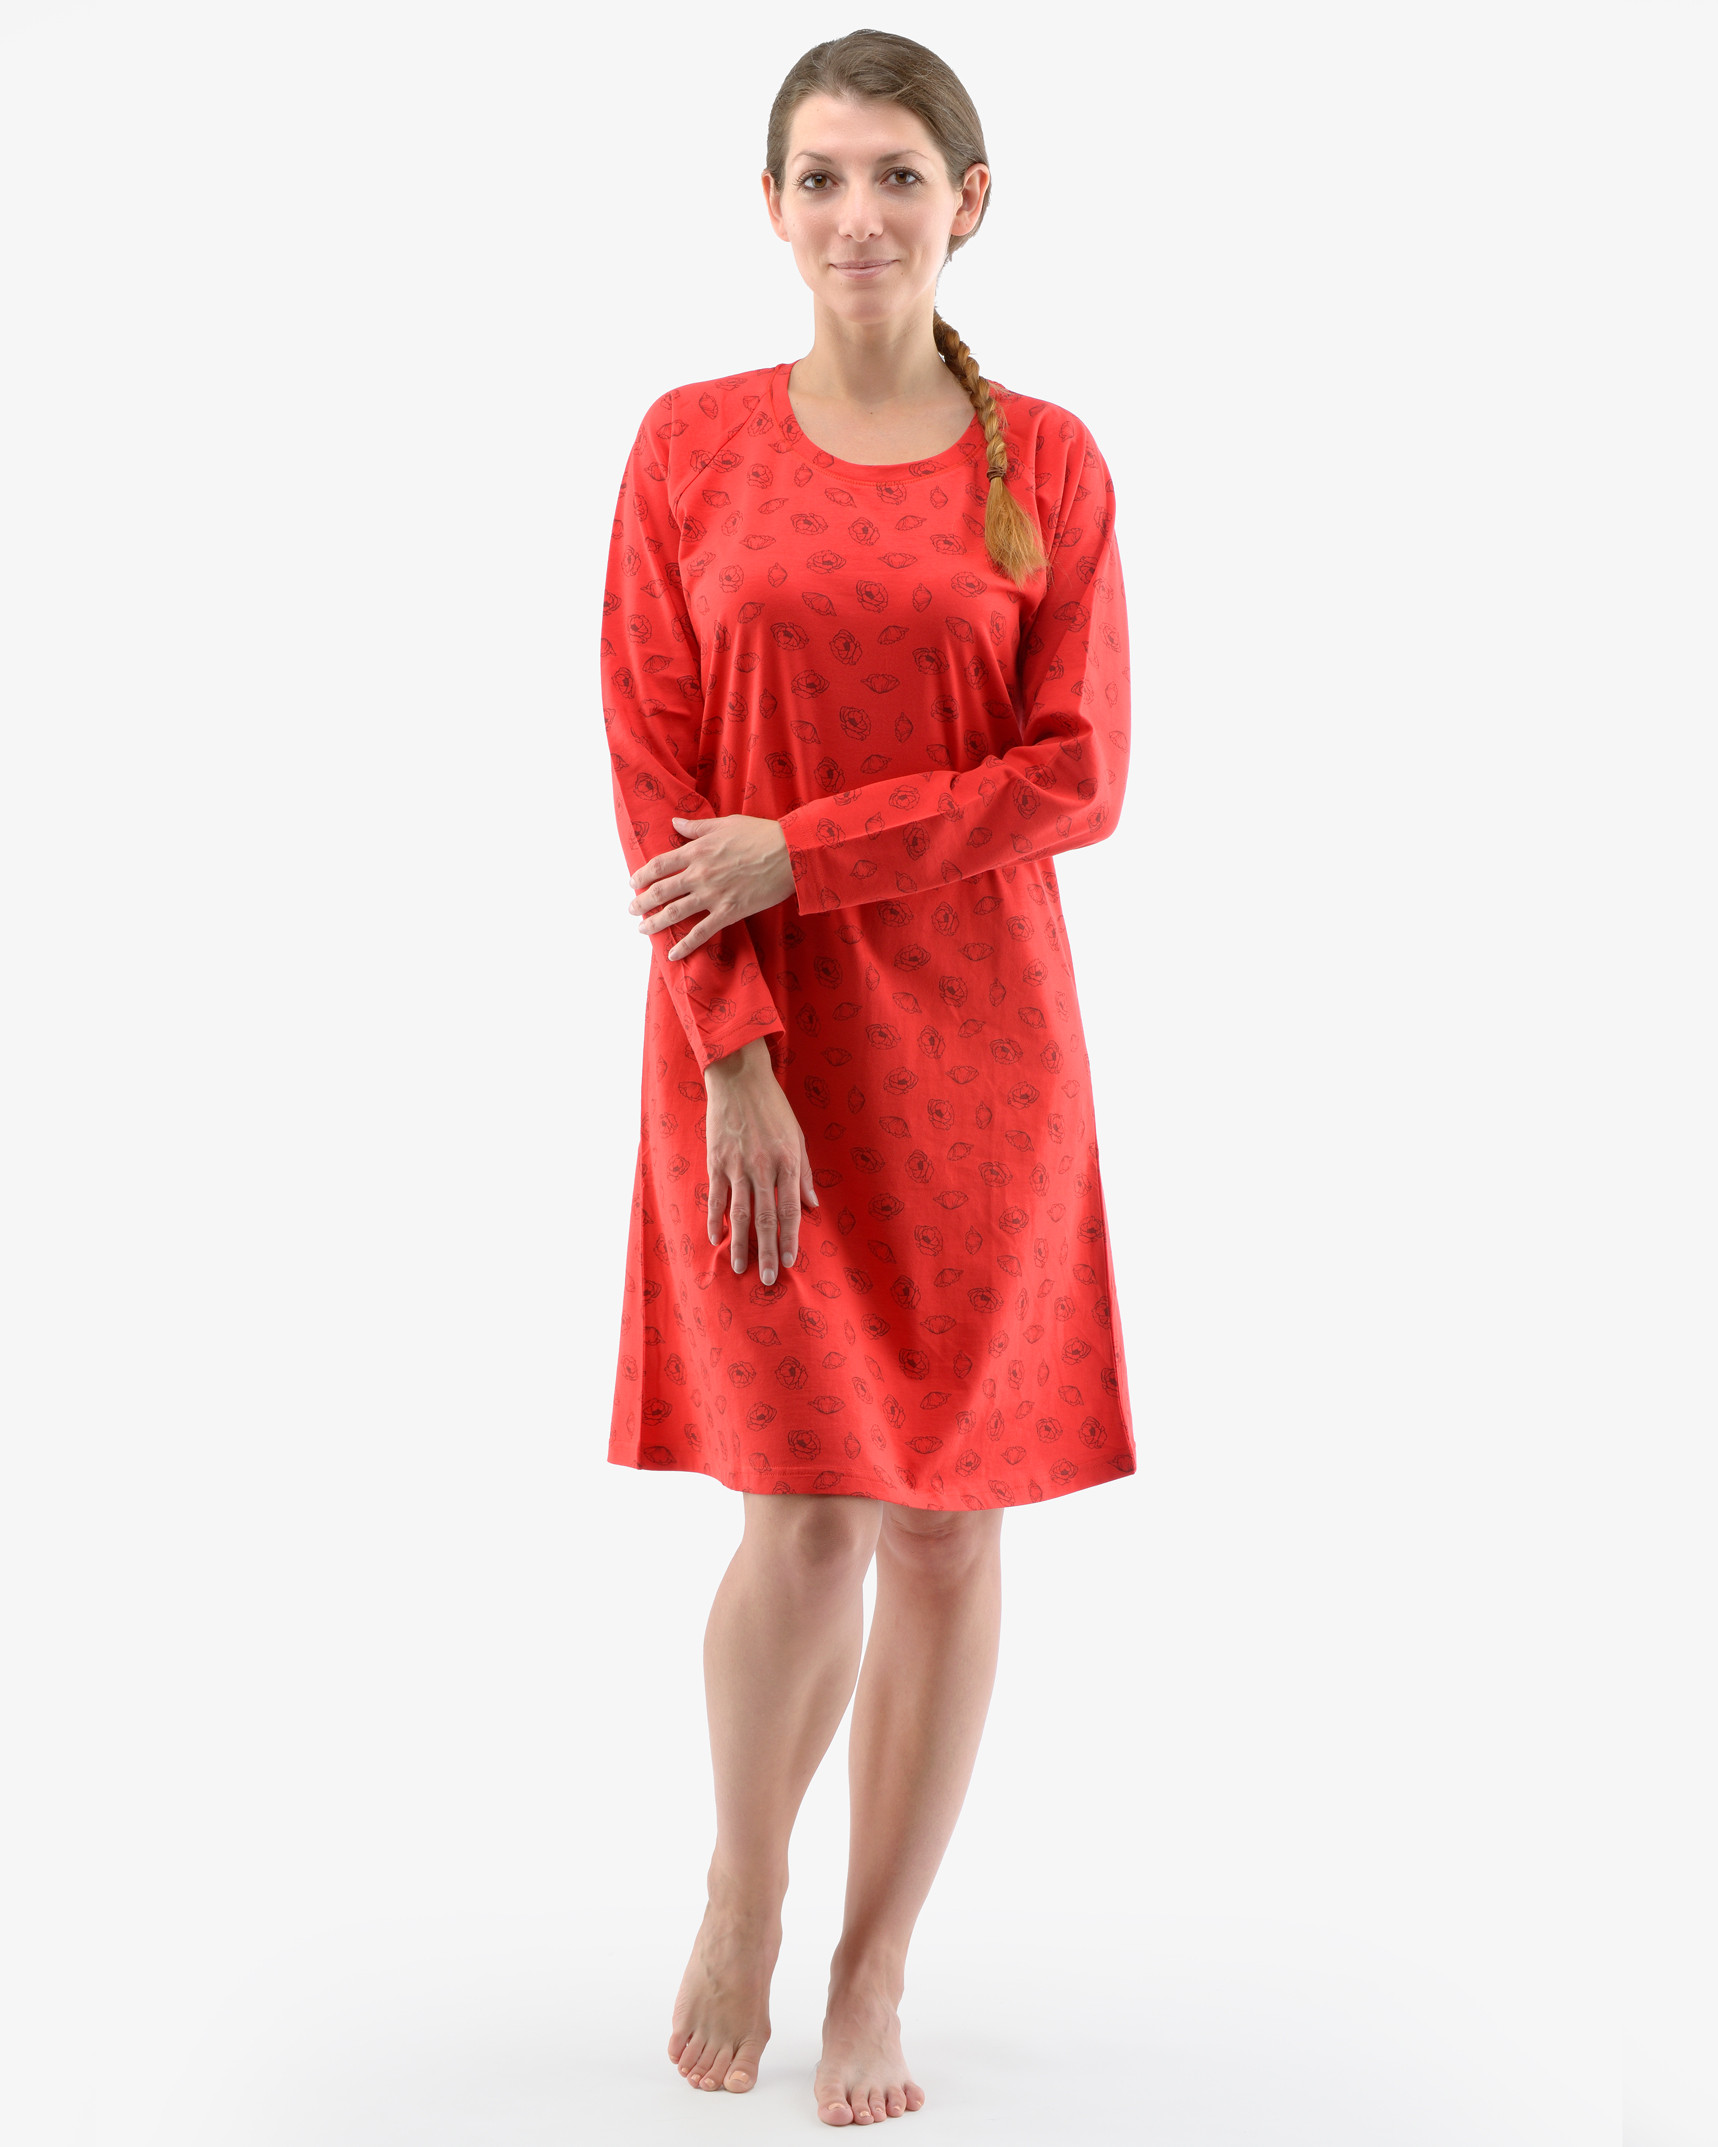 Women's nightgown Gina red